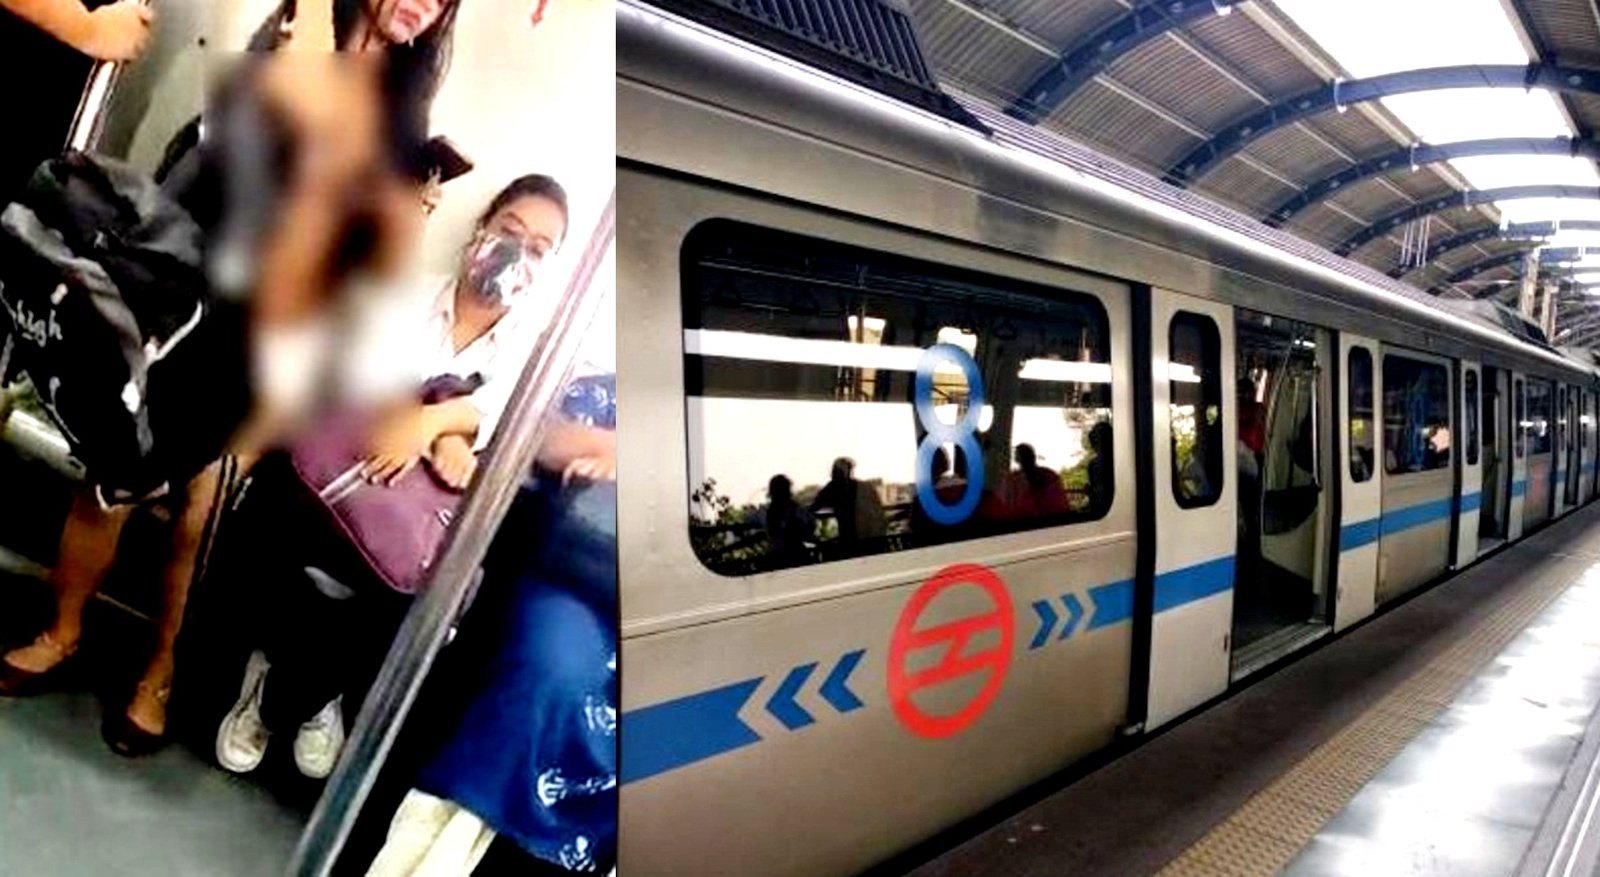 Video of skimpily clad woman in Delhi Metro